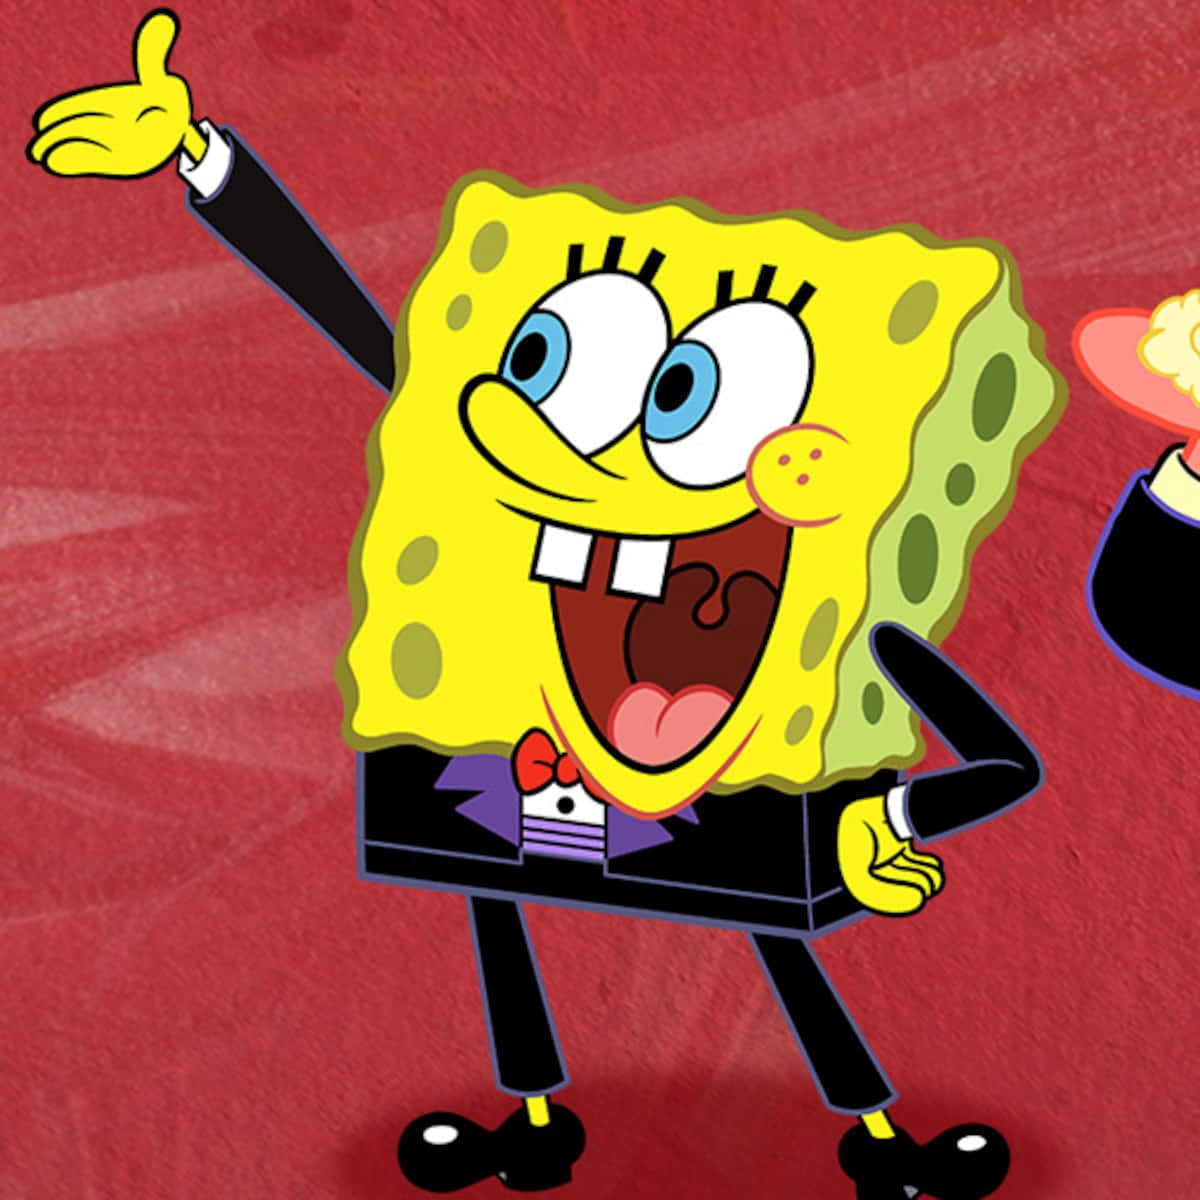 Waiter Spongebob In A Suit Picture